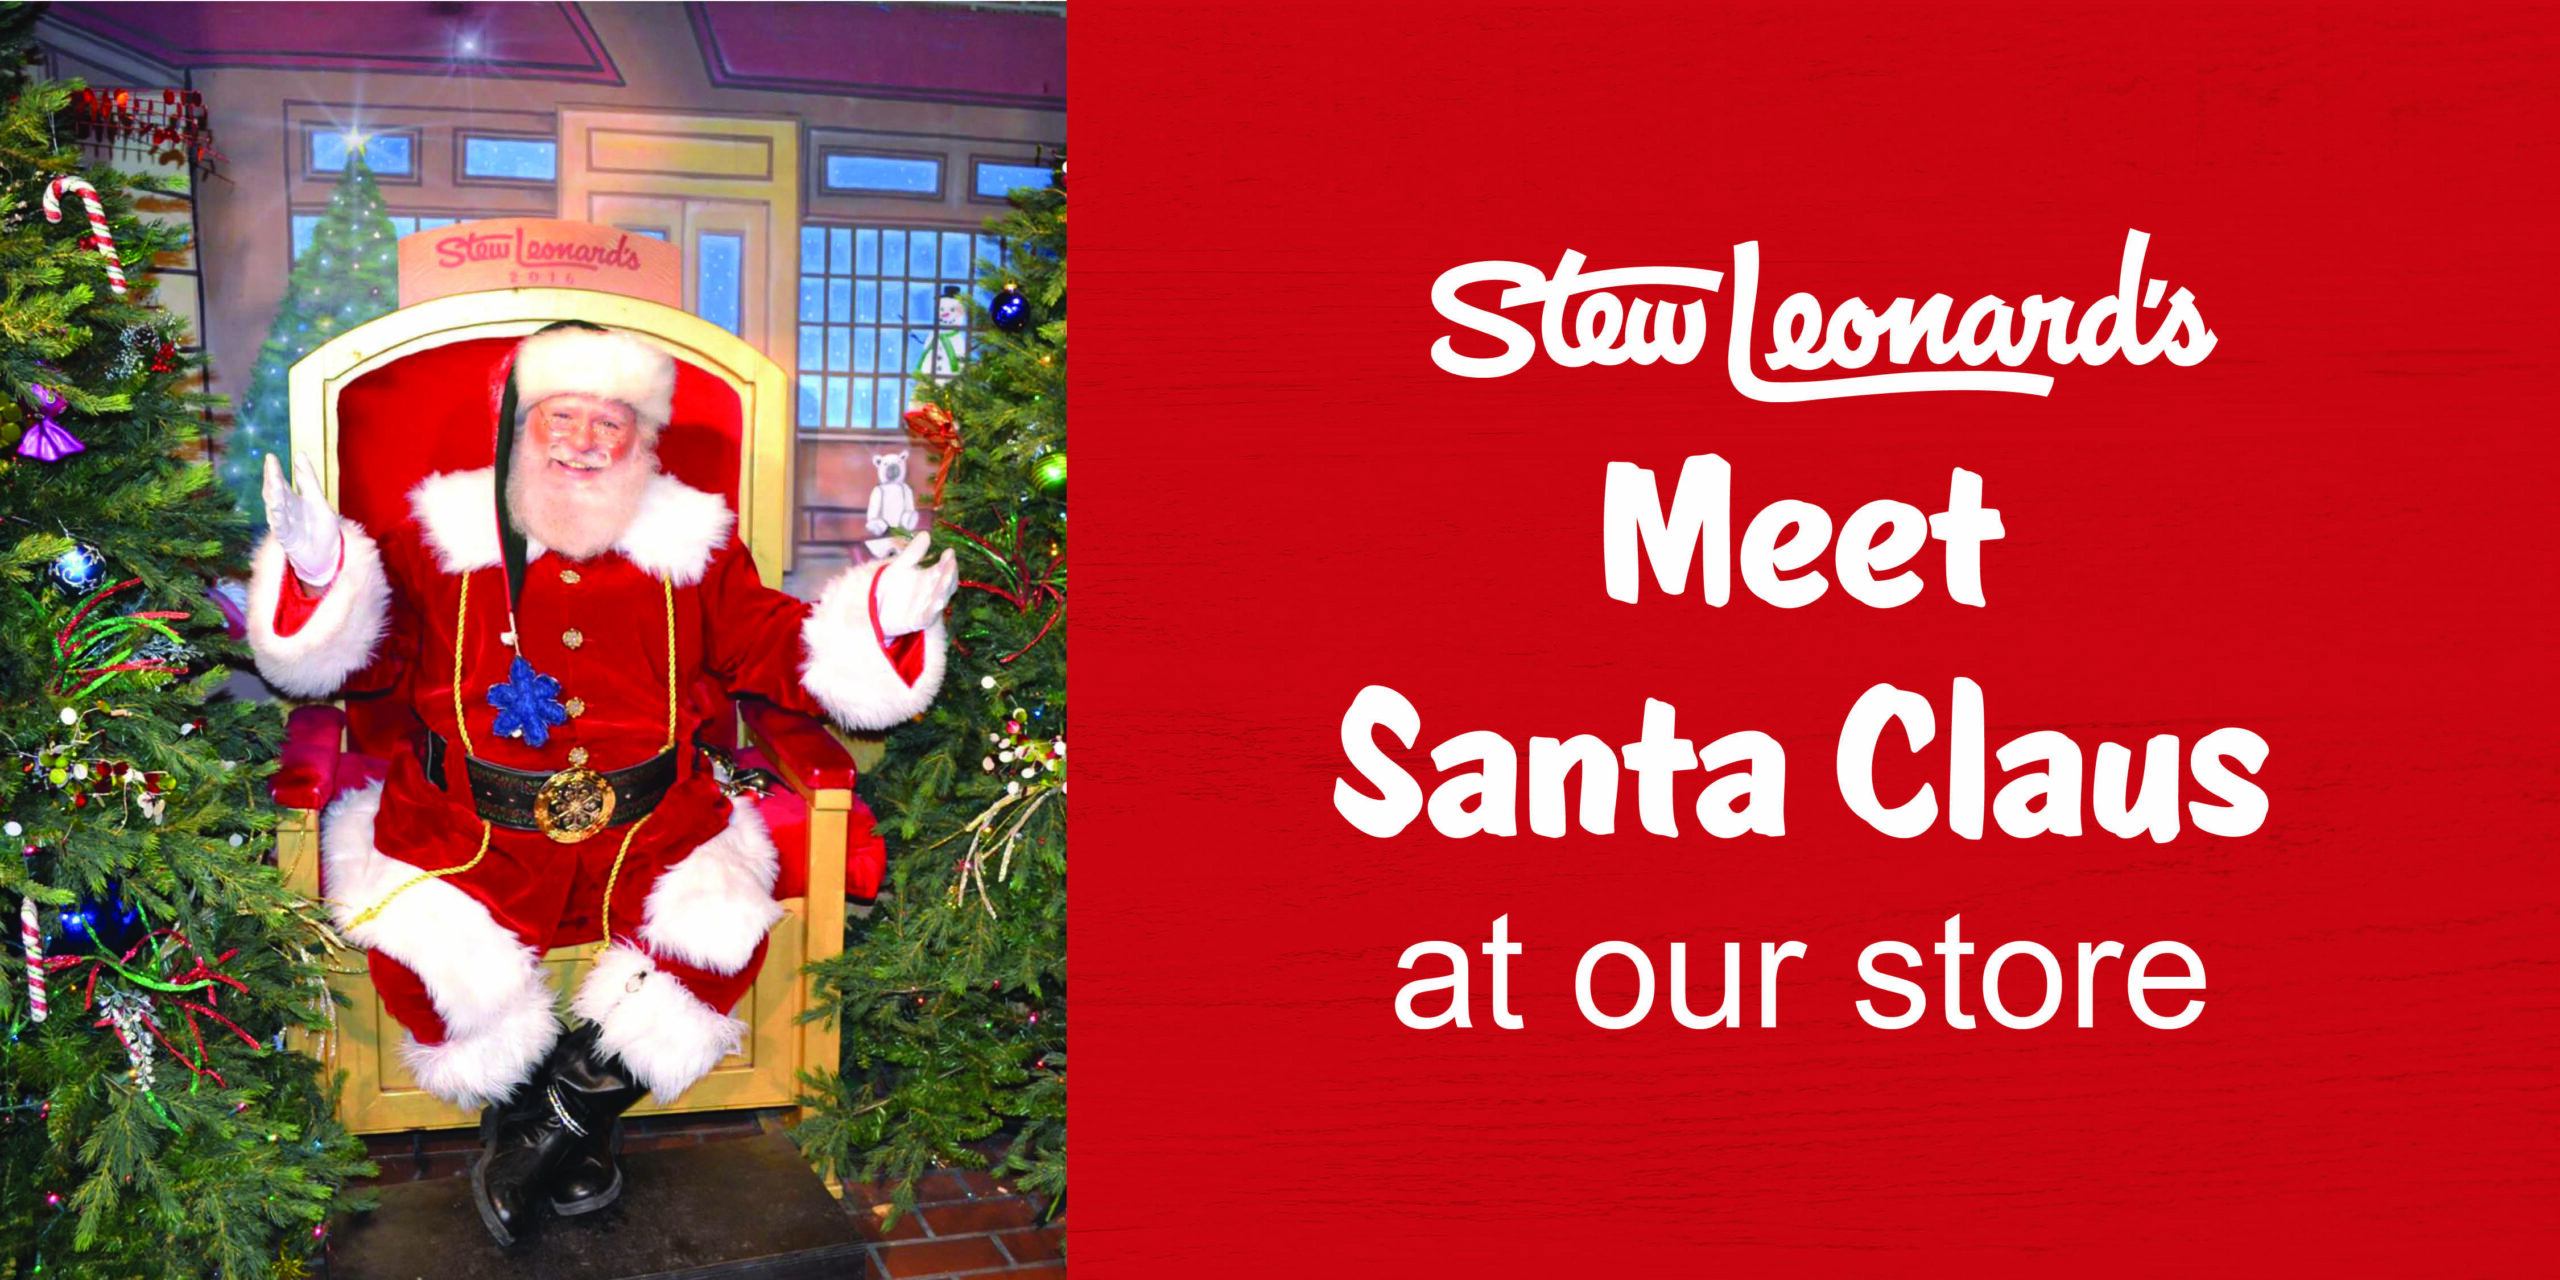 Meet Santa Claus at Stew’s!